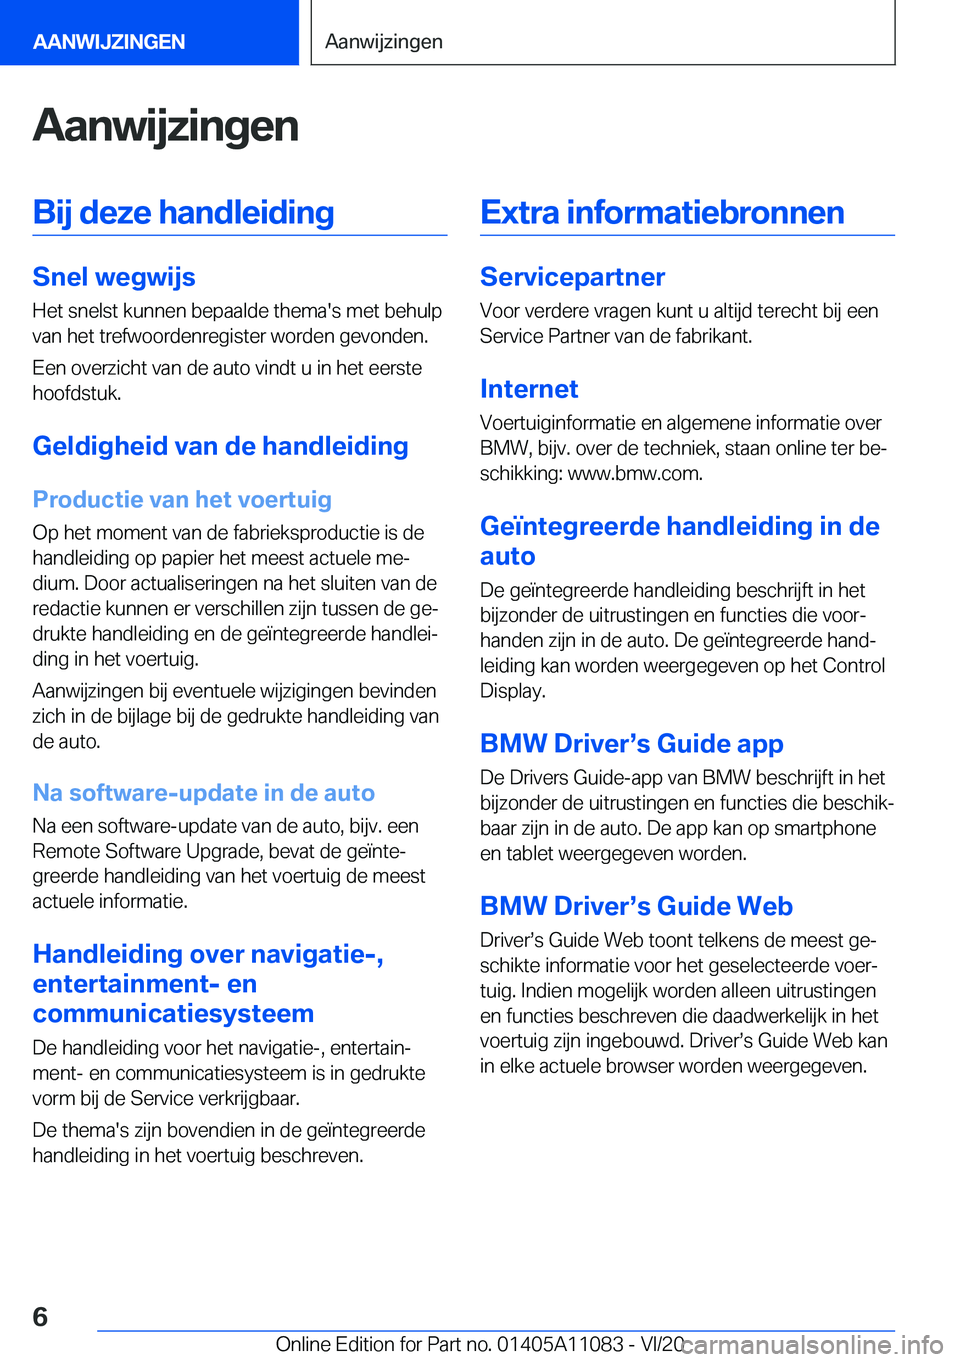 BMW 7 SERIES 2021  Instructieboekjes (in Dutch) �A�a�n�w�i�j�z�i�n�g�e�n�B�i�j��d�e�z�e��h�a�n�d�l�e�i�d�i�n�g
�S�n�e�l��w�e�g�w�i�j�s
�H�e�t��s�n�e�l�s�t��k�u�n�n�e�n��b�e�p�a�a�l�d�e��t�h�e�m�a�'�s��m�e�t��b�e�h�u�l�p
�v�a�n��h�e�t�